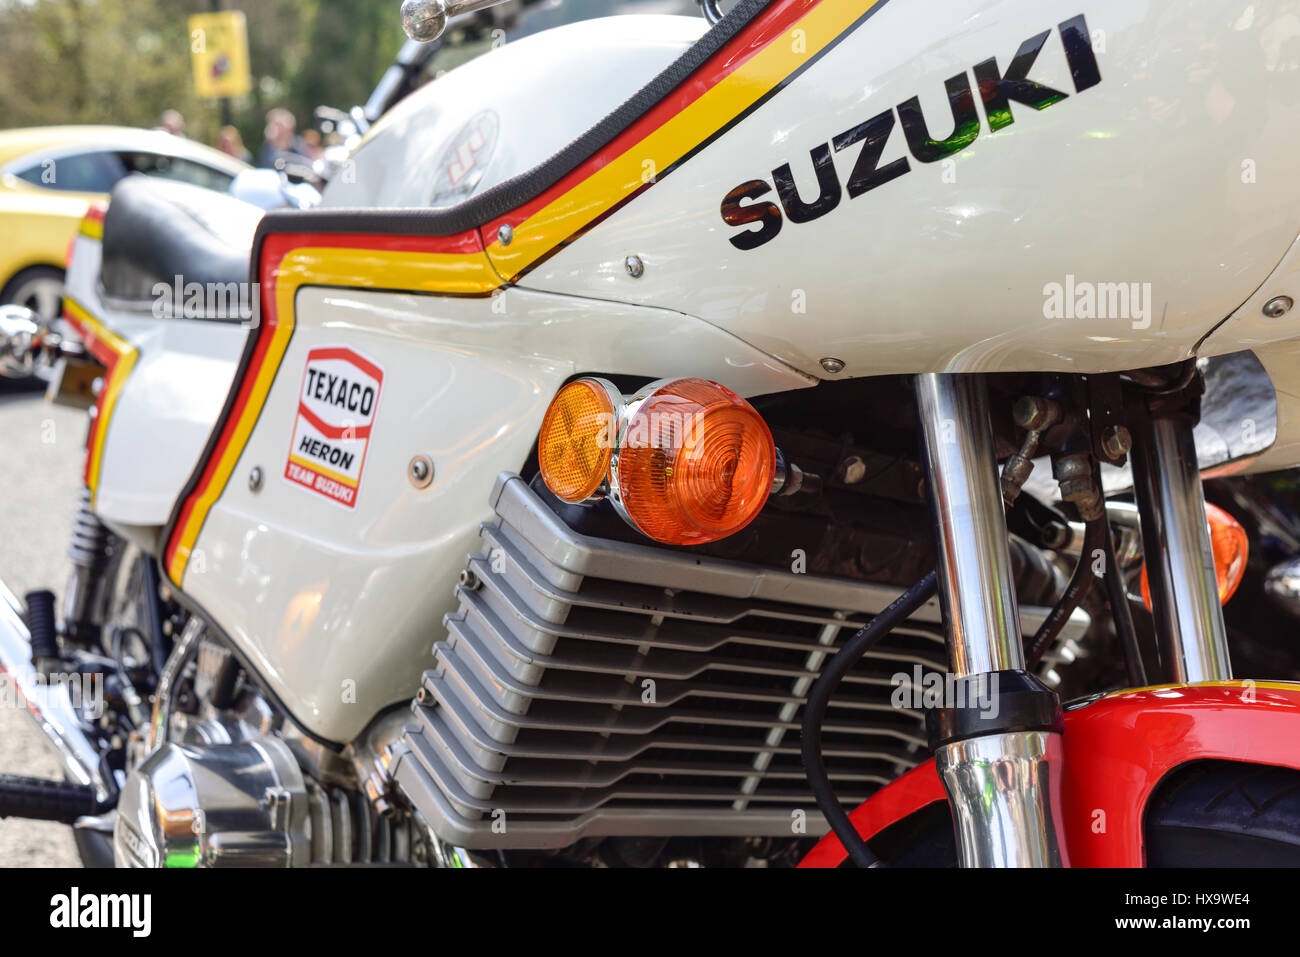 Liquid Cooled Pioneer: The Suzuki GT750 – Old Bike Barn